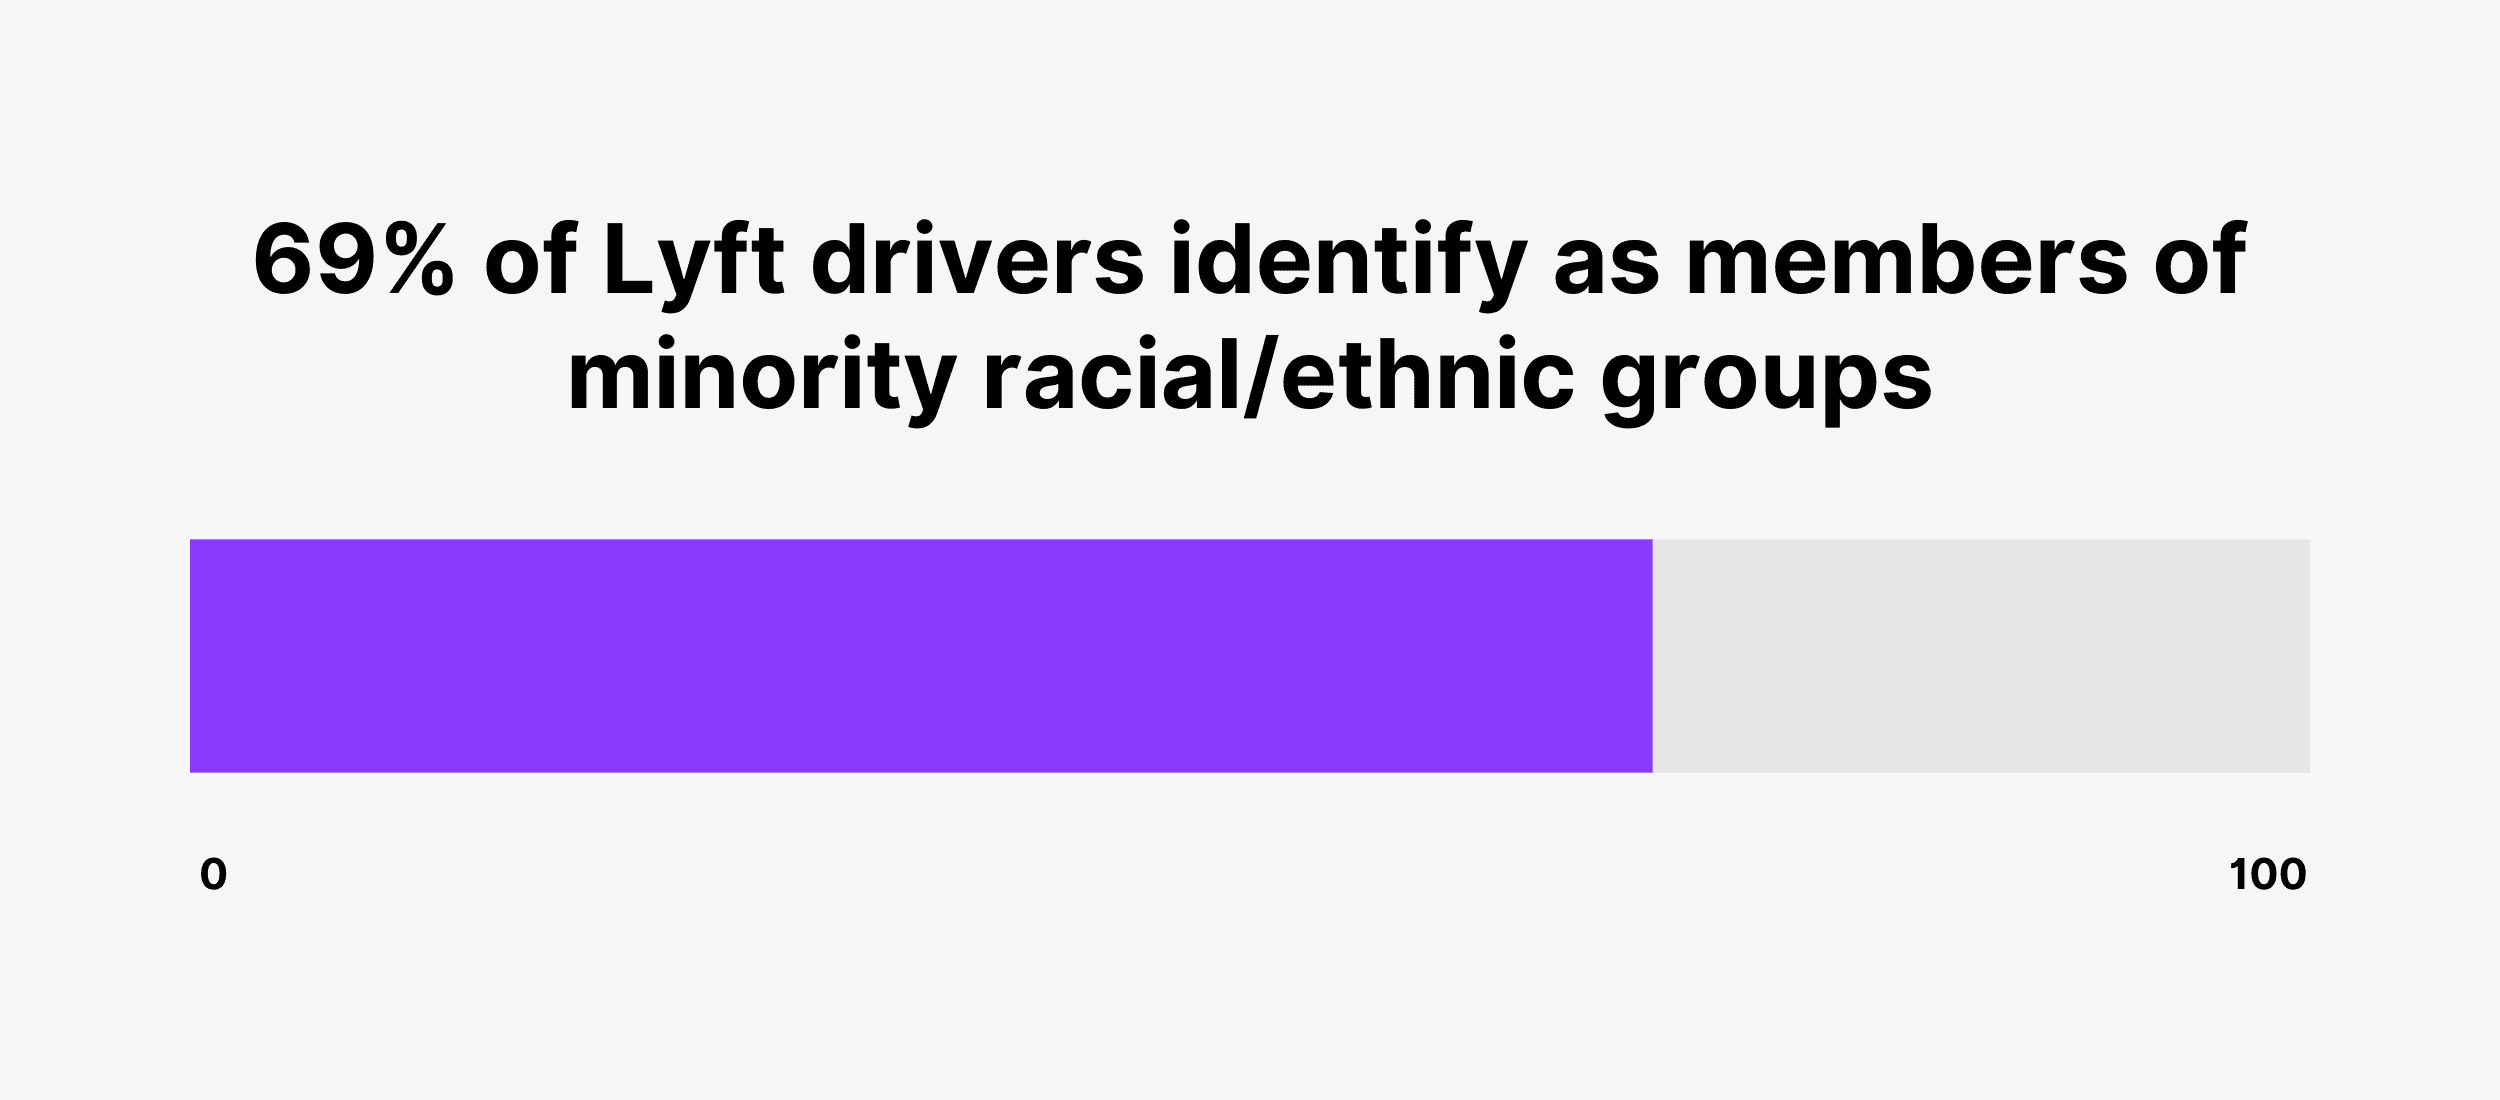 69% of Lyft drivers identify as members of minority racial/ethnic groups